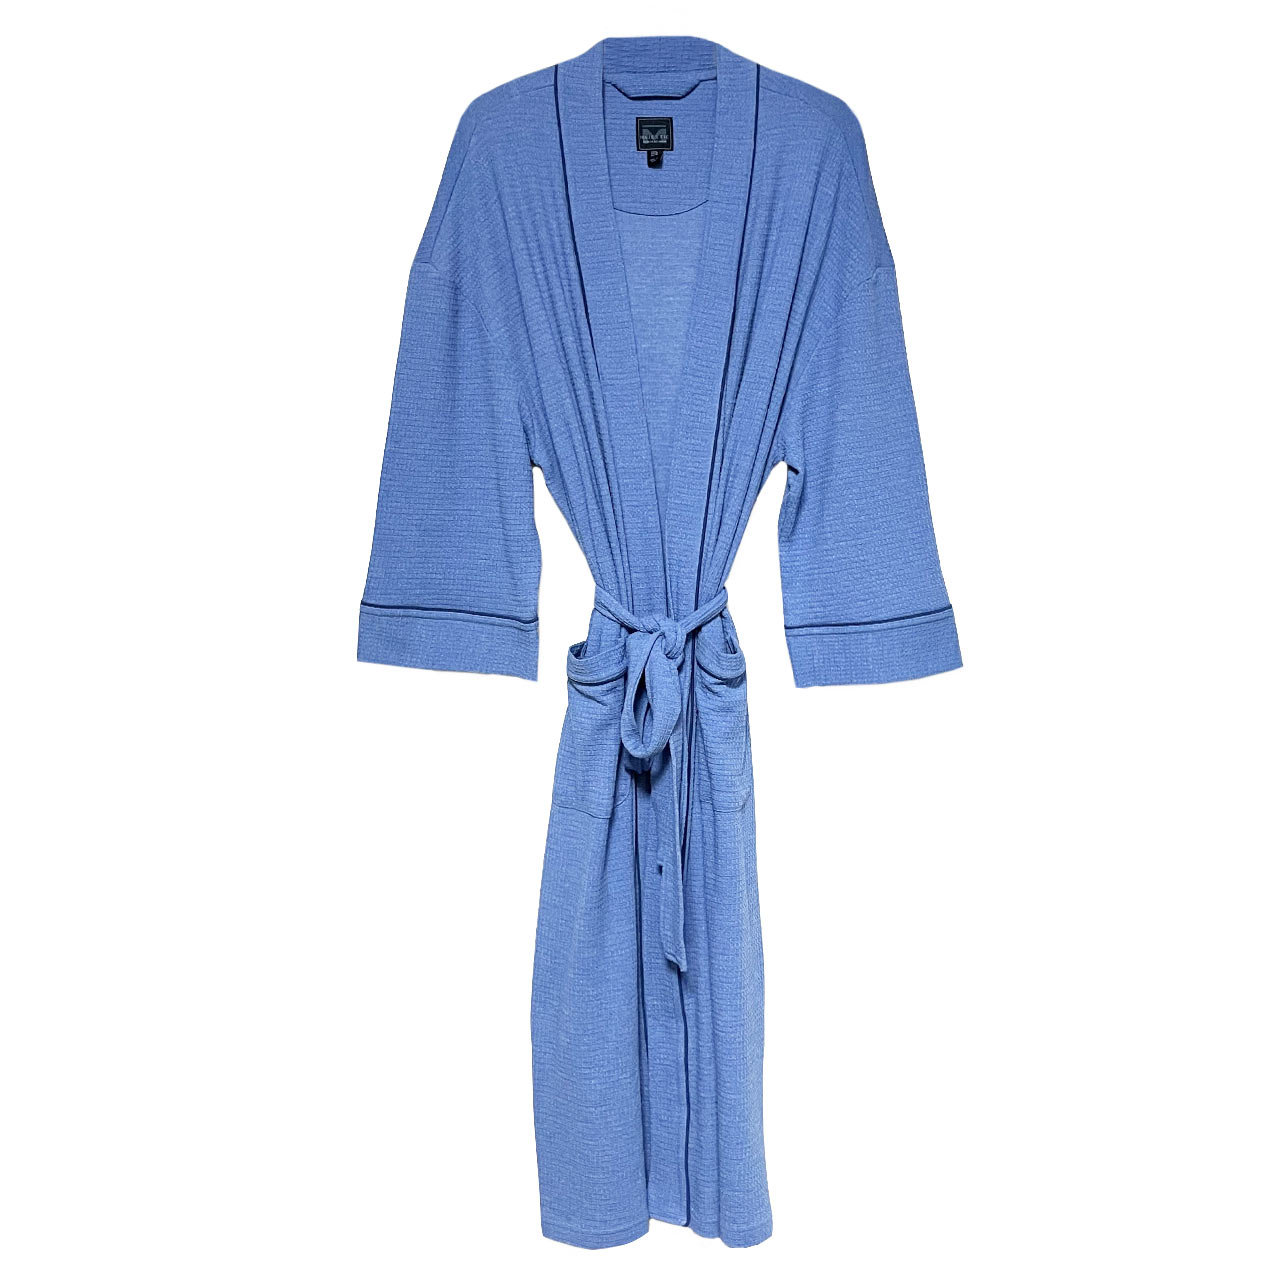 Men's Majestic International Knit Waffle Weave Kimono Unisex Robe #1850120, Blue With Navy Piping